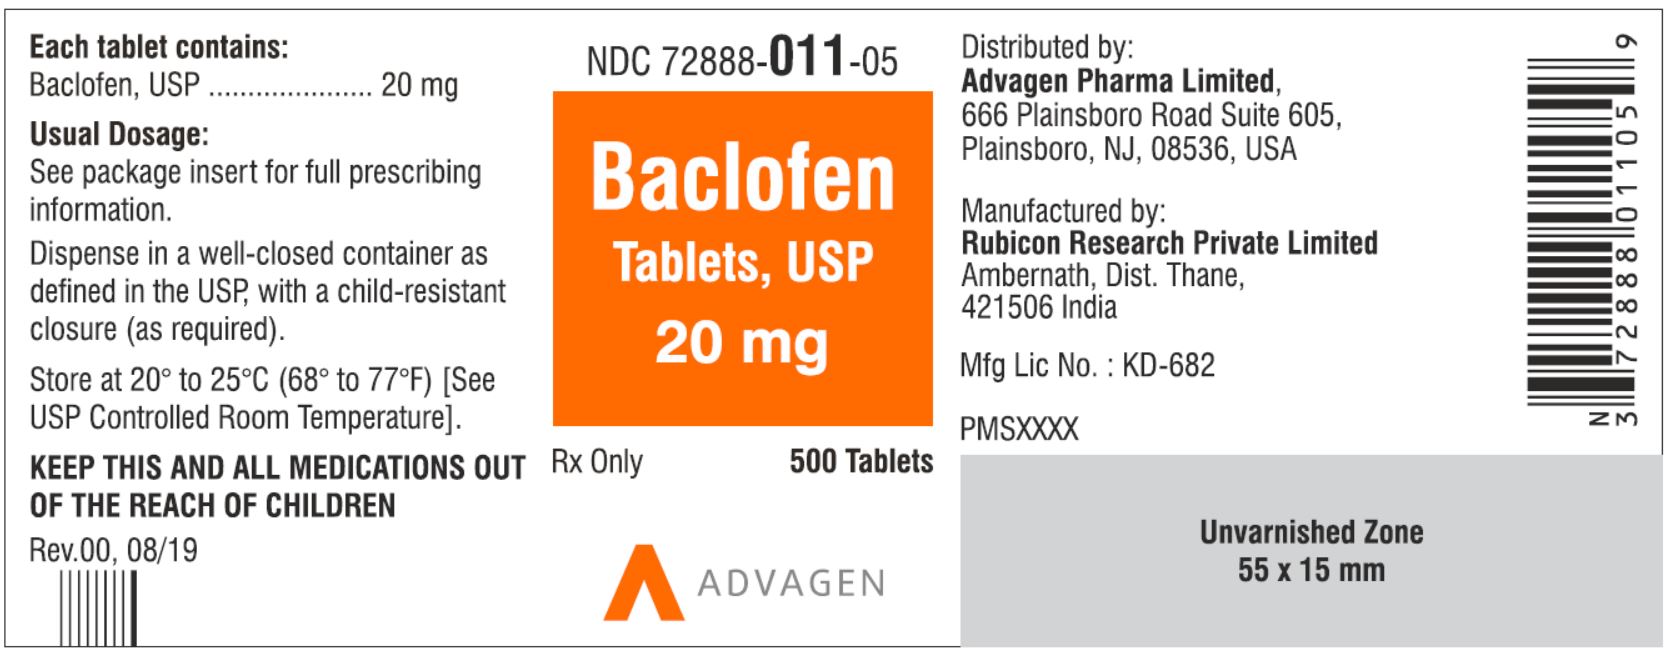 NDC 72888-011-05 - Baclofen Tablets, USP 20 mg - 500 Tablets